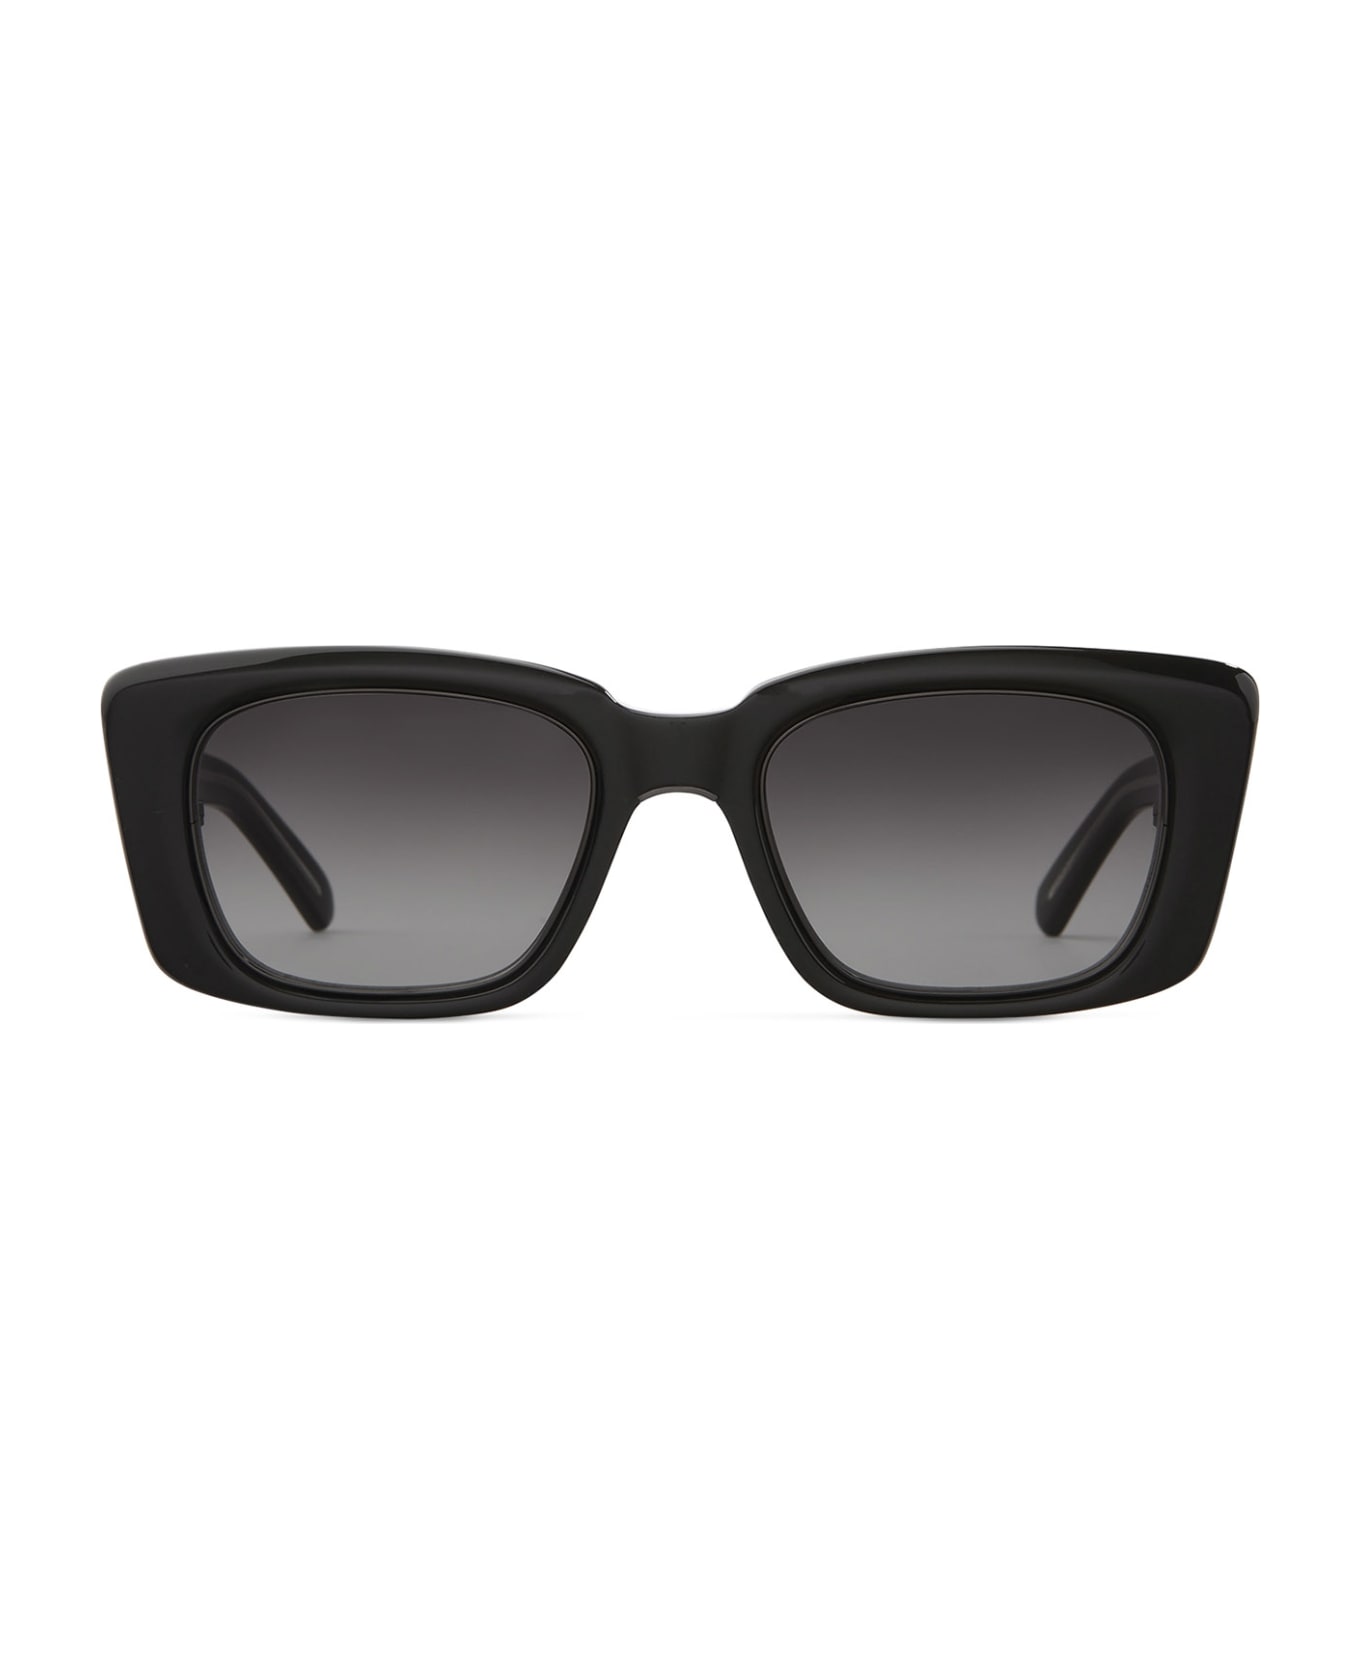 Mr. Leight Carman S Black-gunmetal Sunglasses - Black-Gunmetal